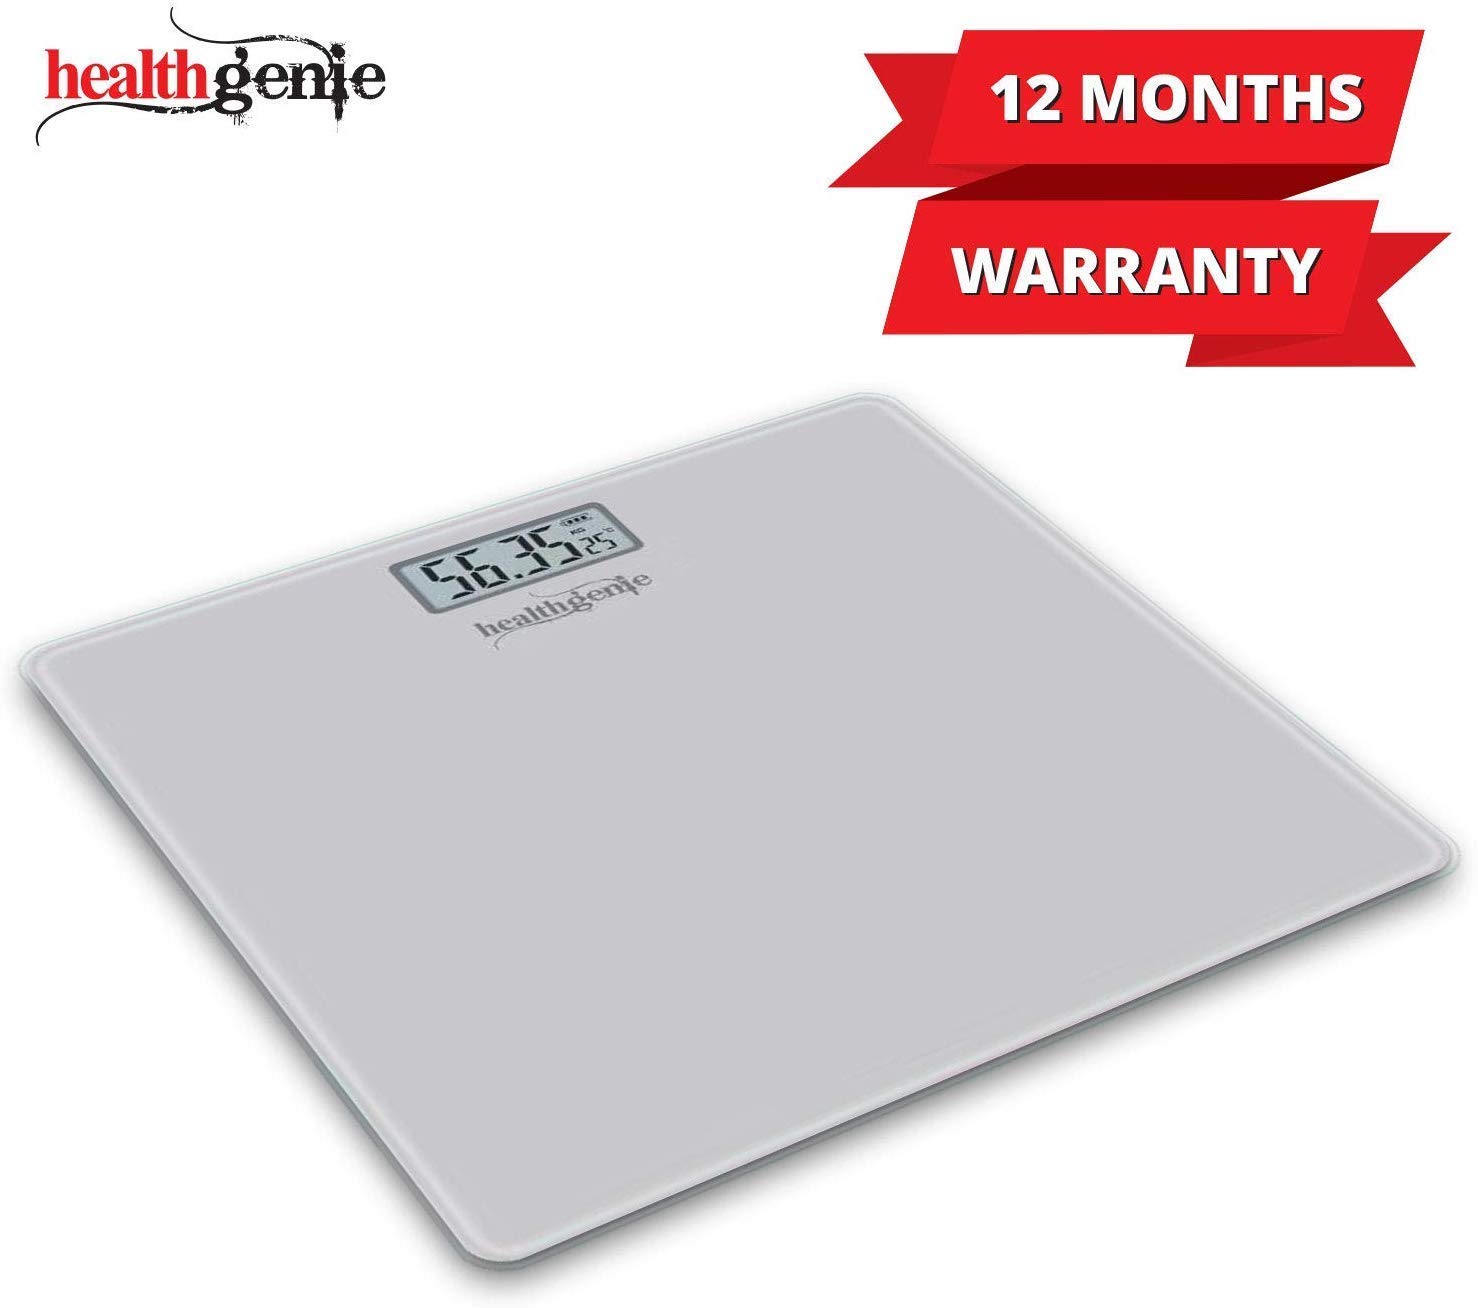 Healthgenie Digital Personal Weighing Scale Hd 221 Mini Silver Warranty